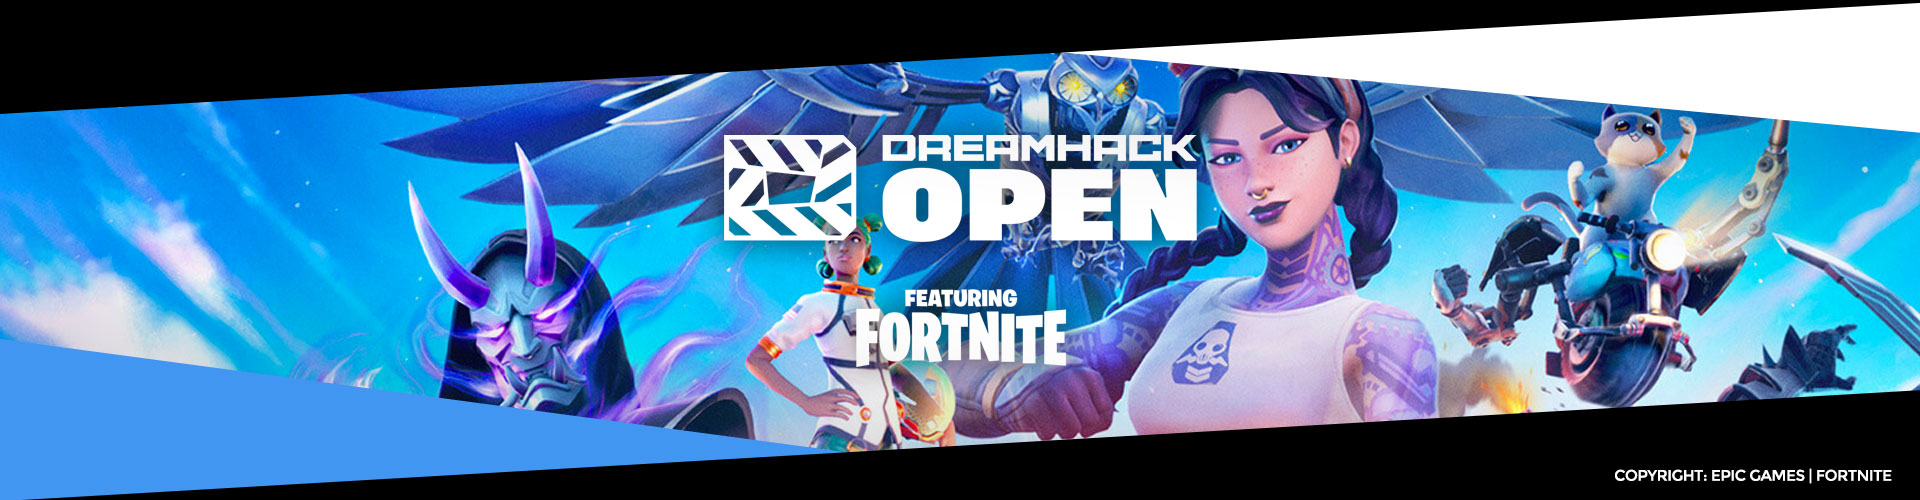 Dreamhack Open Fortnite - Kickoff event Solo tournament